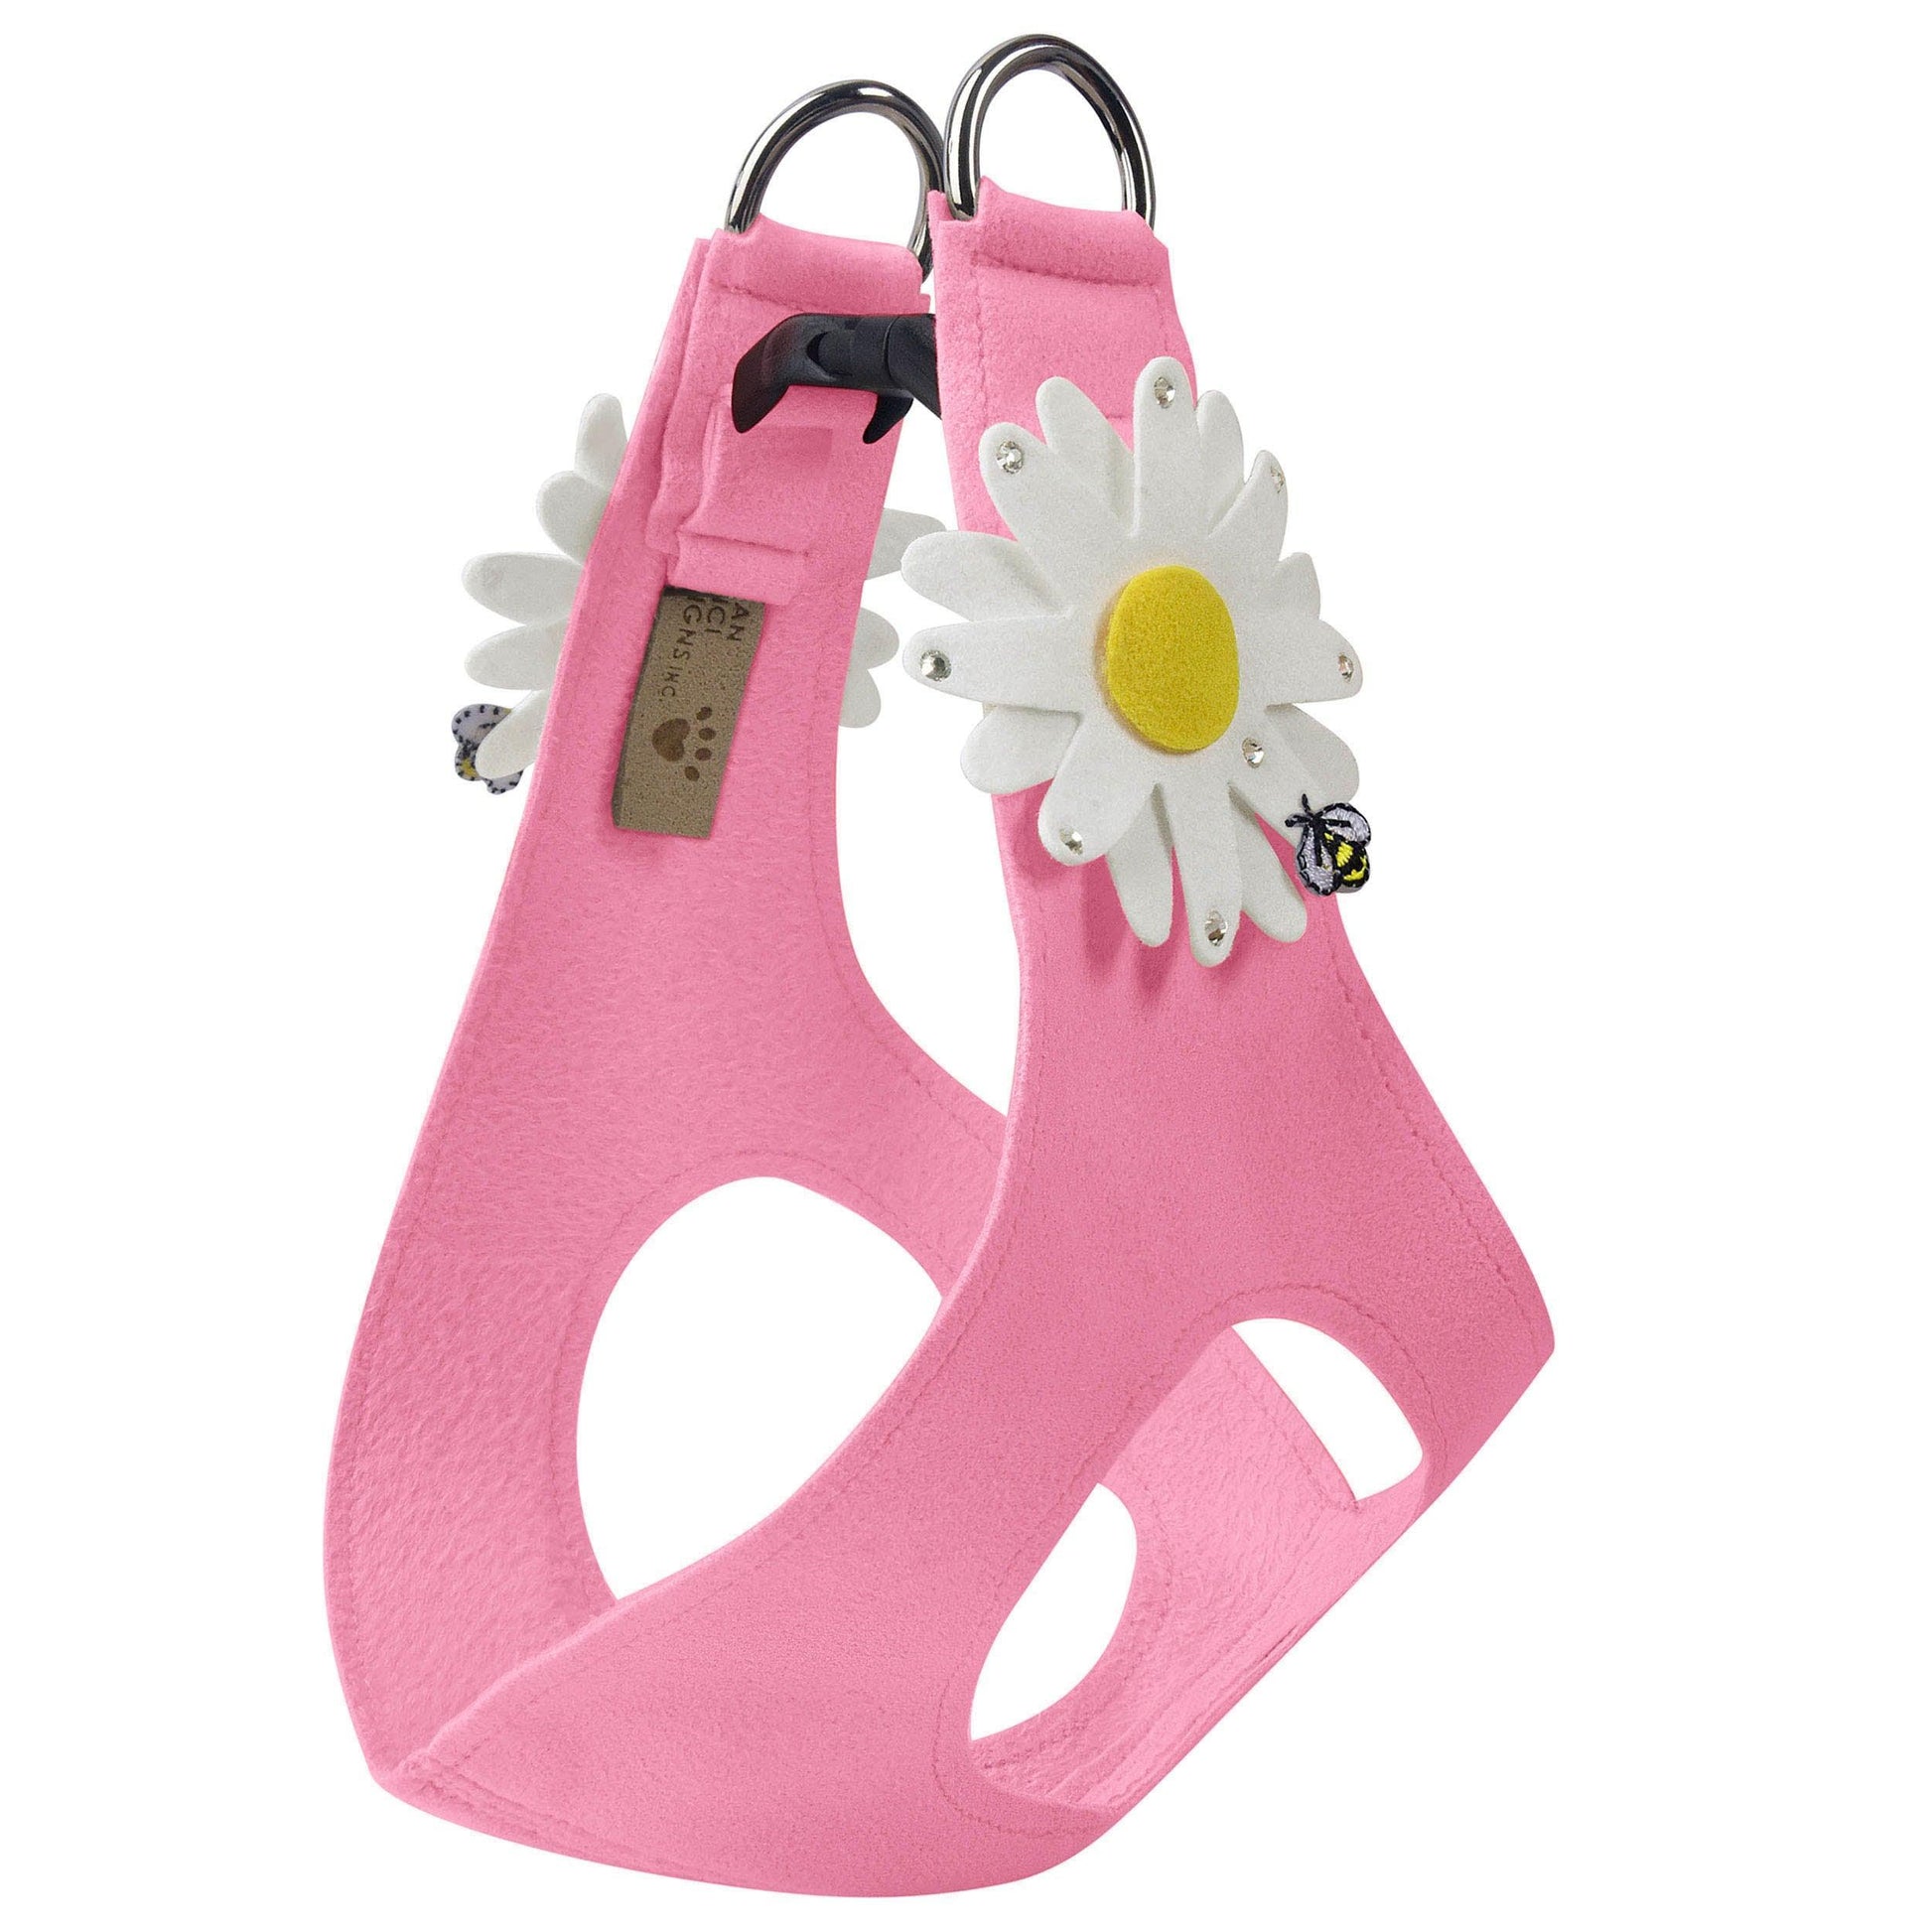 High-quality step-in designer dog harnesses Perfect Pink - Pooch La La